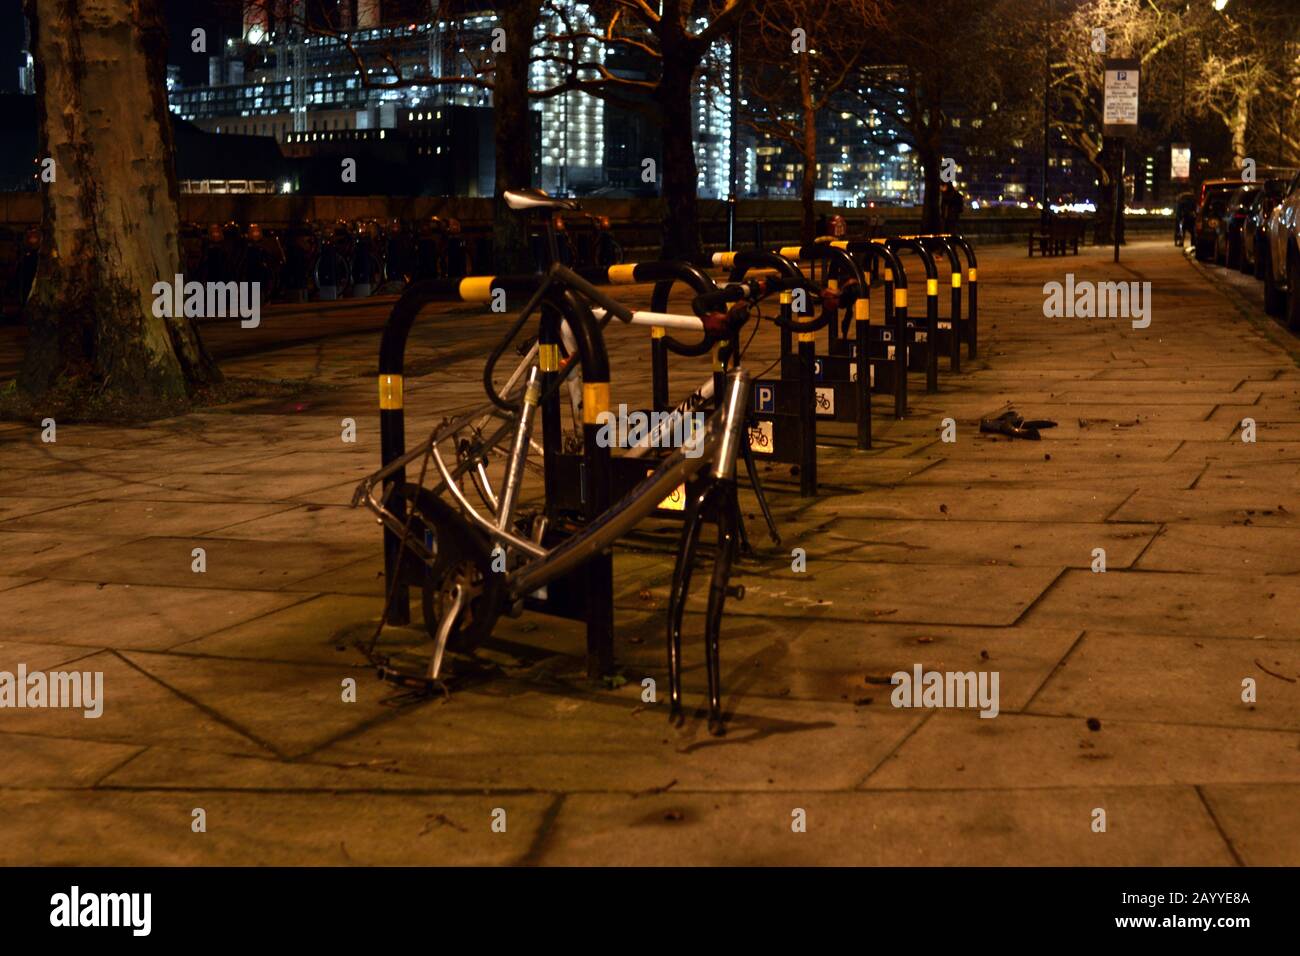 London, UK - 16 Deb 2020. Bike racks with abandoned broken bikes at night under sodium street lighting Stock Photo